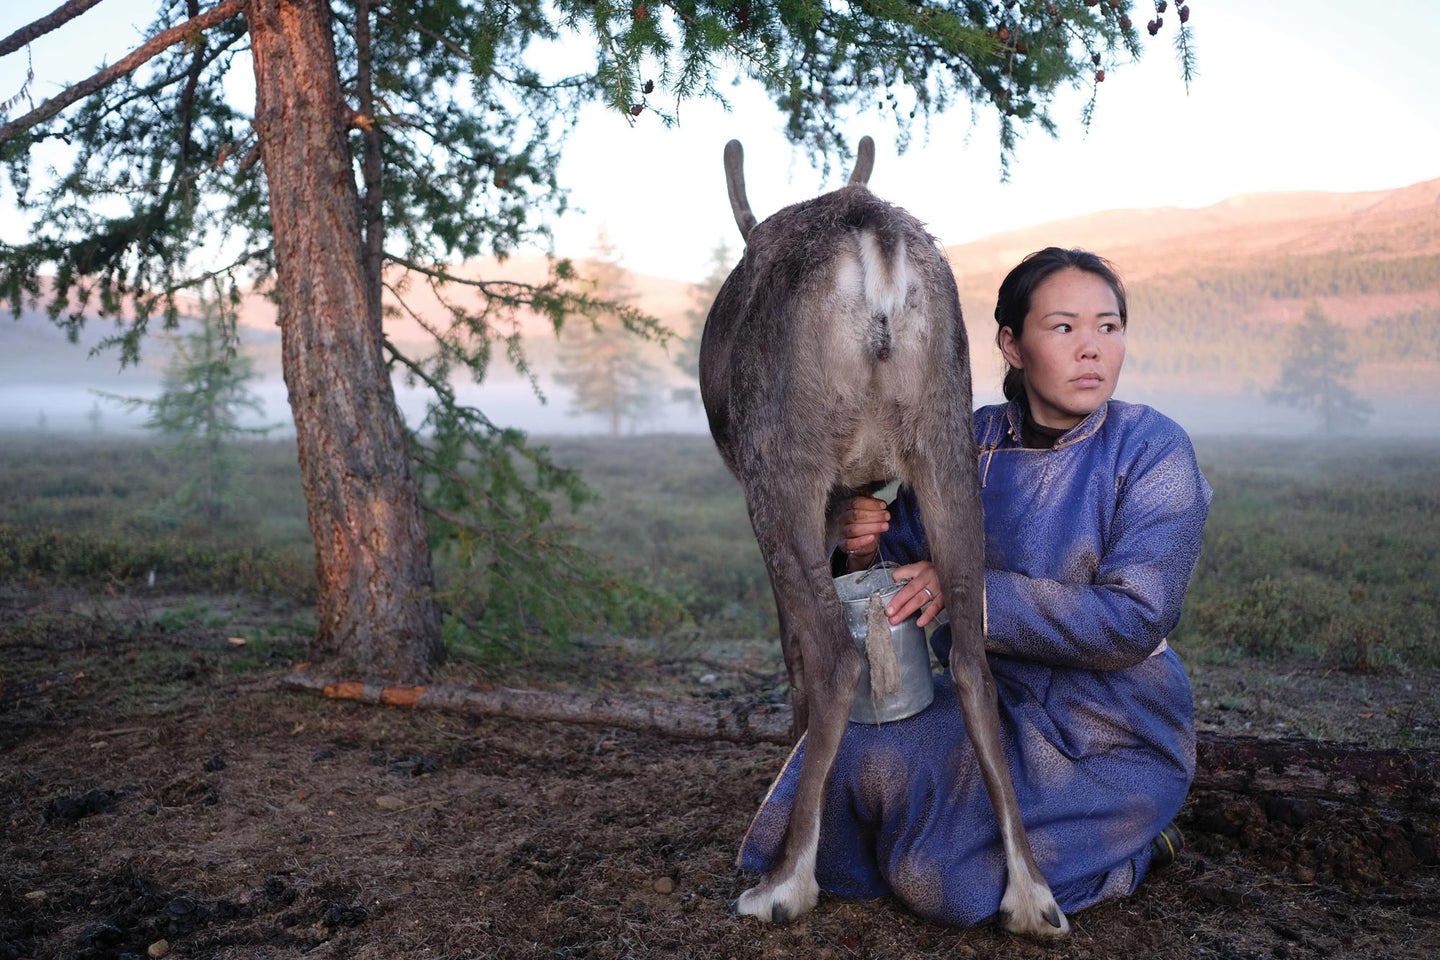 Mongolian woman milking an animal